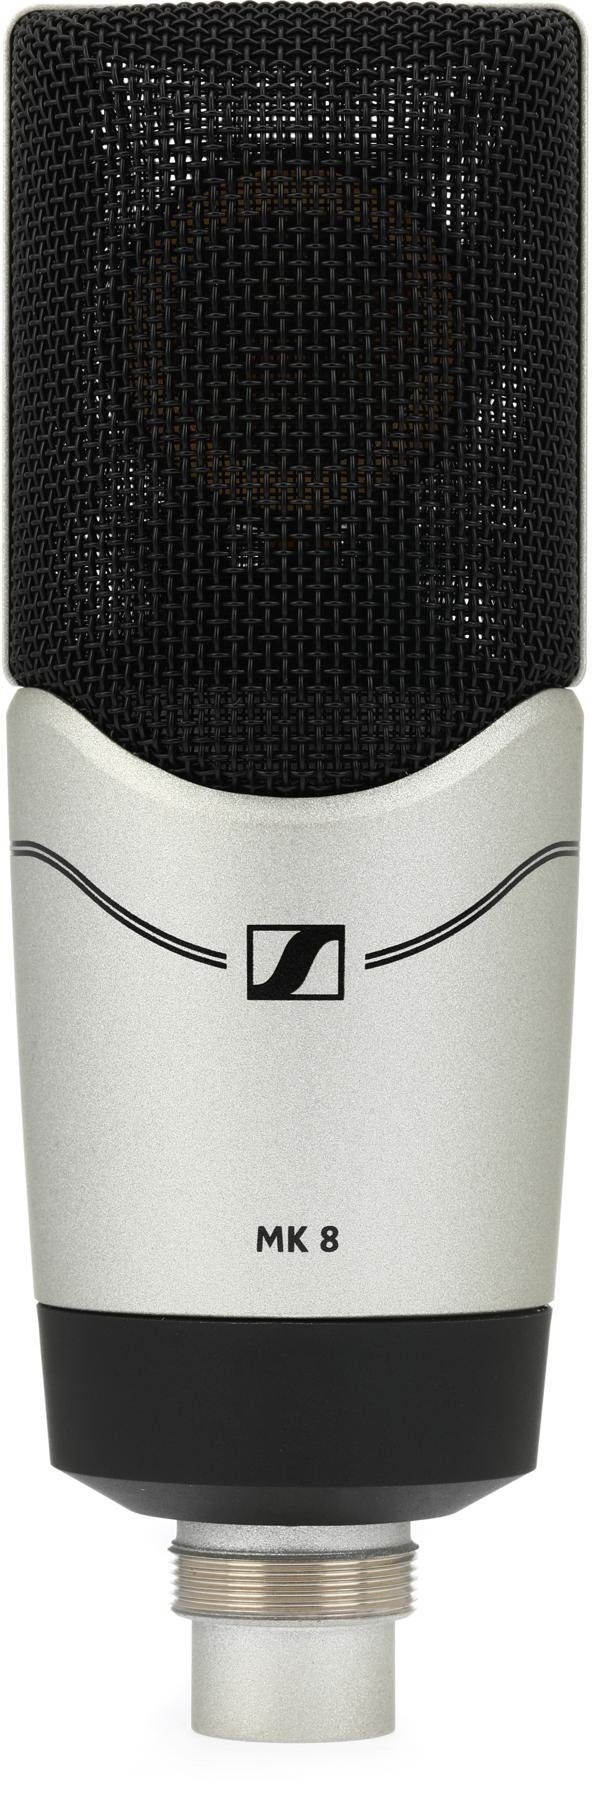 Sennheiser MK 8 Large-diaphragm Condenser Microphone | Sweetwater